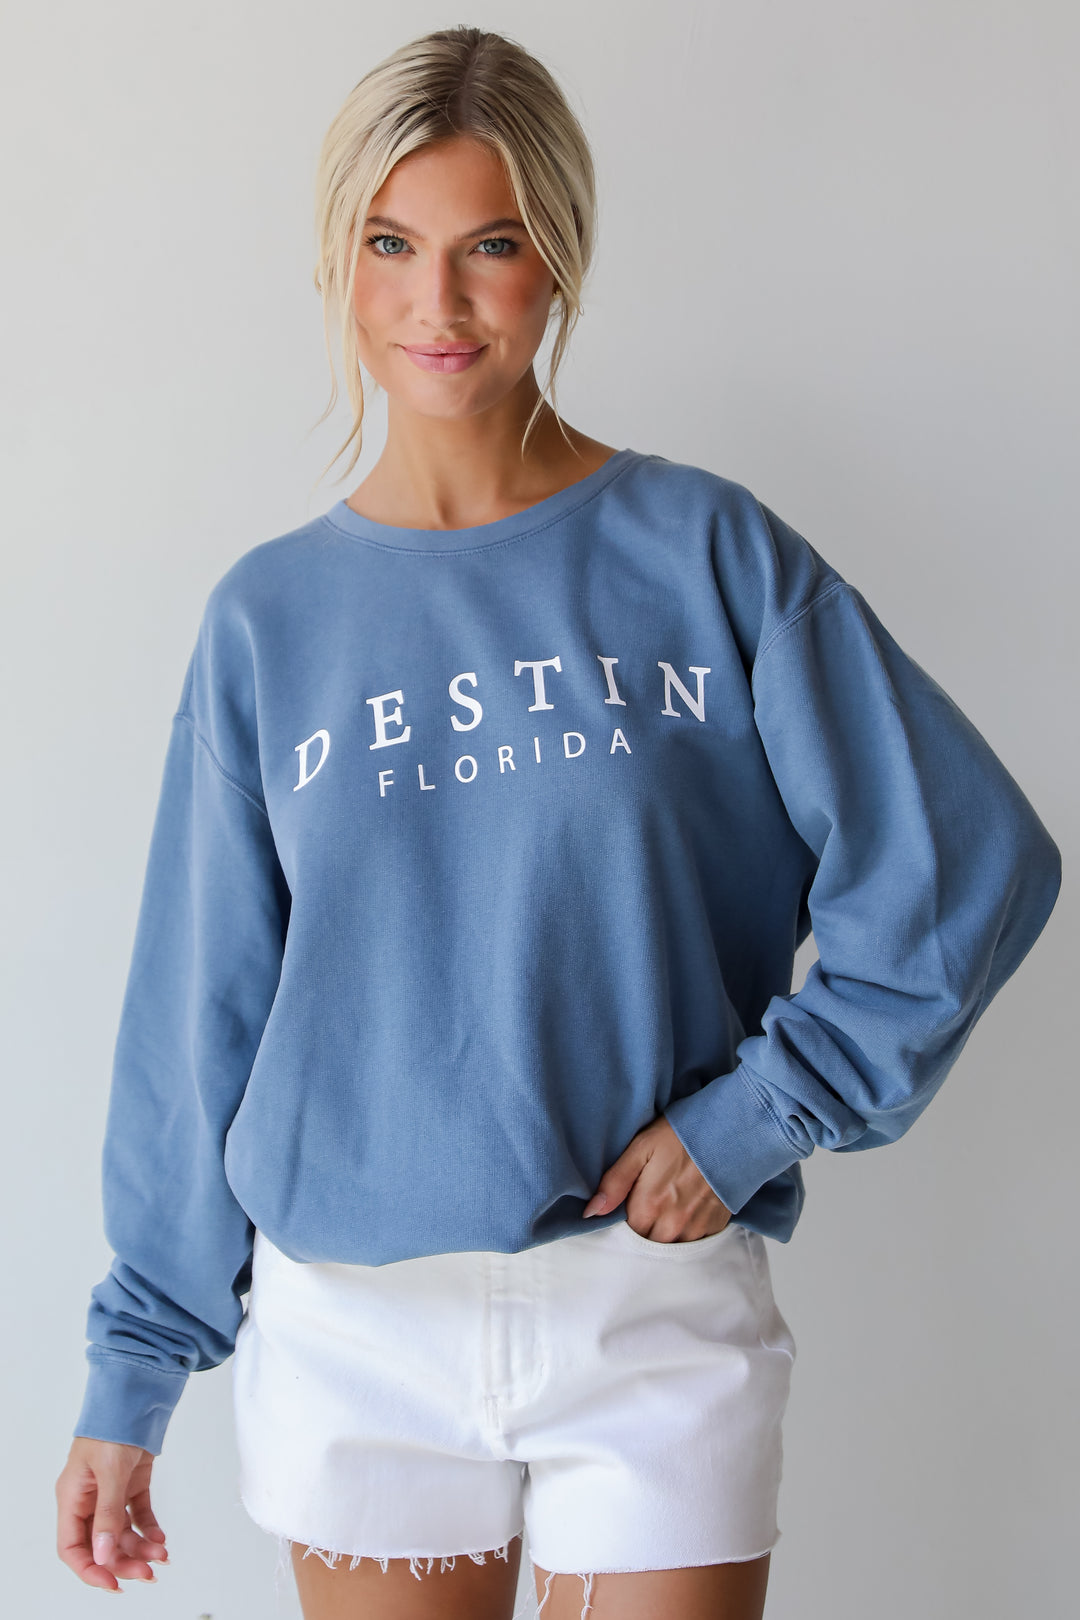 Denim Destin Florida Sweatshirt